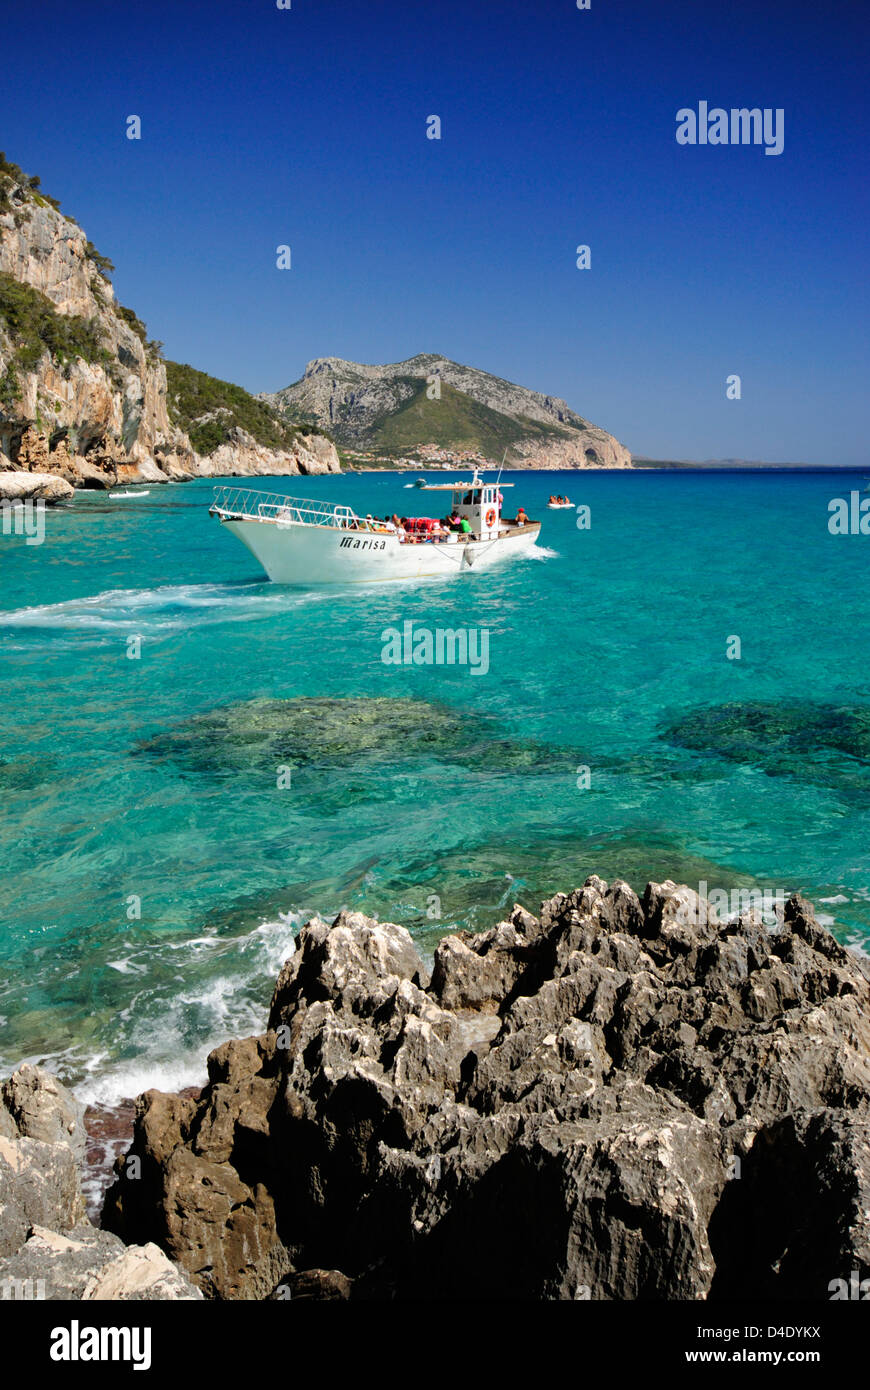 Ferryboat approaching the Bue Marino caves entrance and cliffs, in the Cala Gonone coast, Orosei gulf Sardinia, Italy Stock Photo